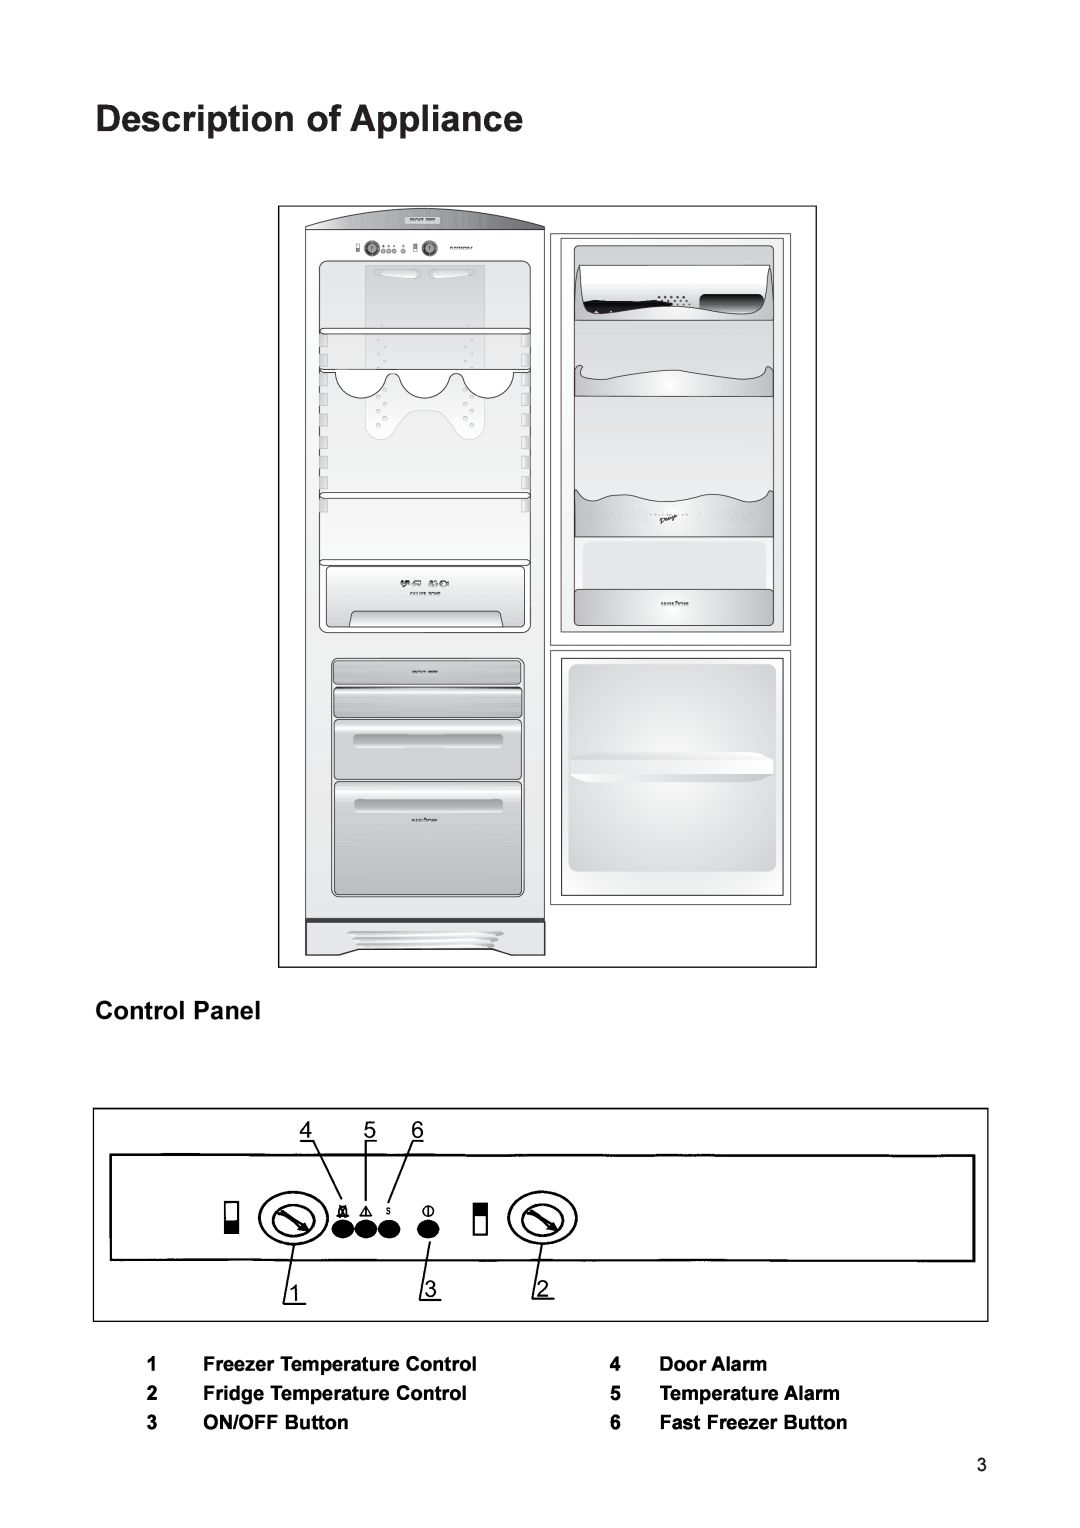 Zanussi ZCFF7/5W manual Description of Appliance, Control Panel, Freezer Temperature Control, Door Alarm, Temperature Alarm 